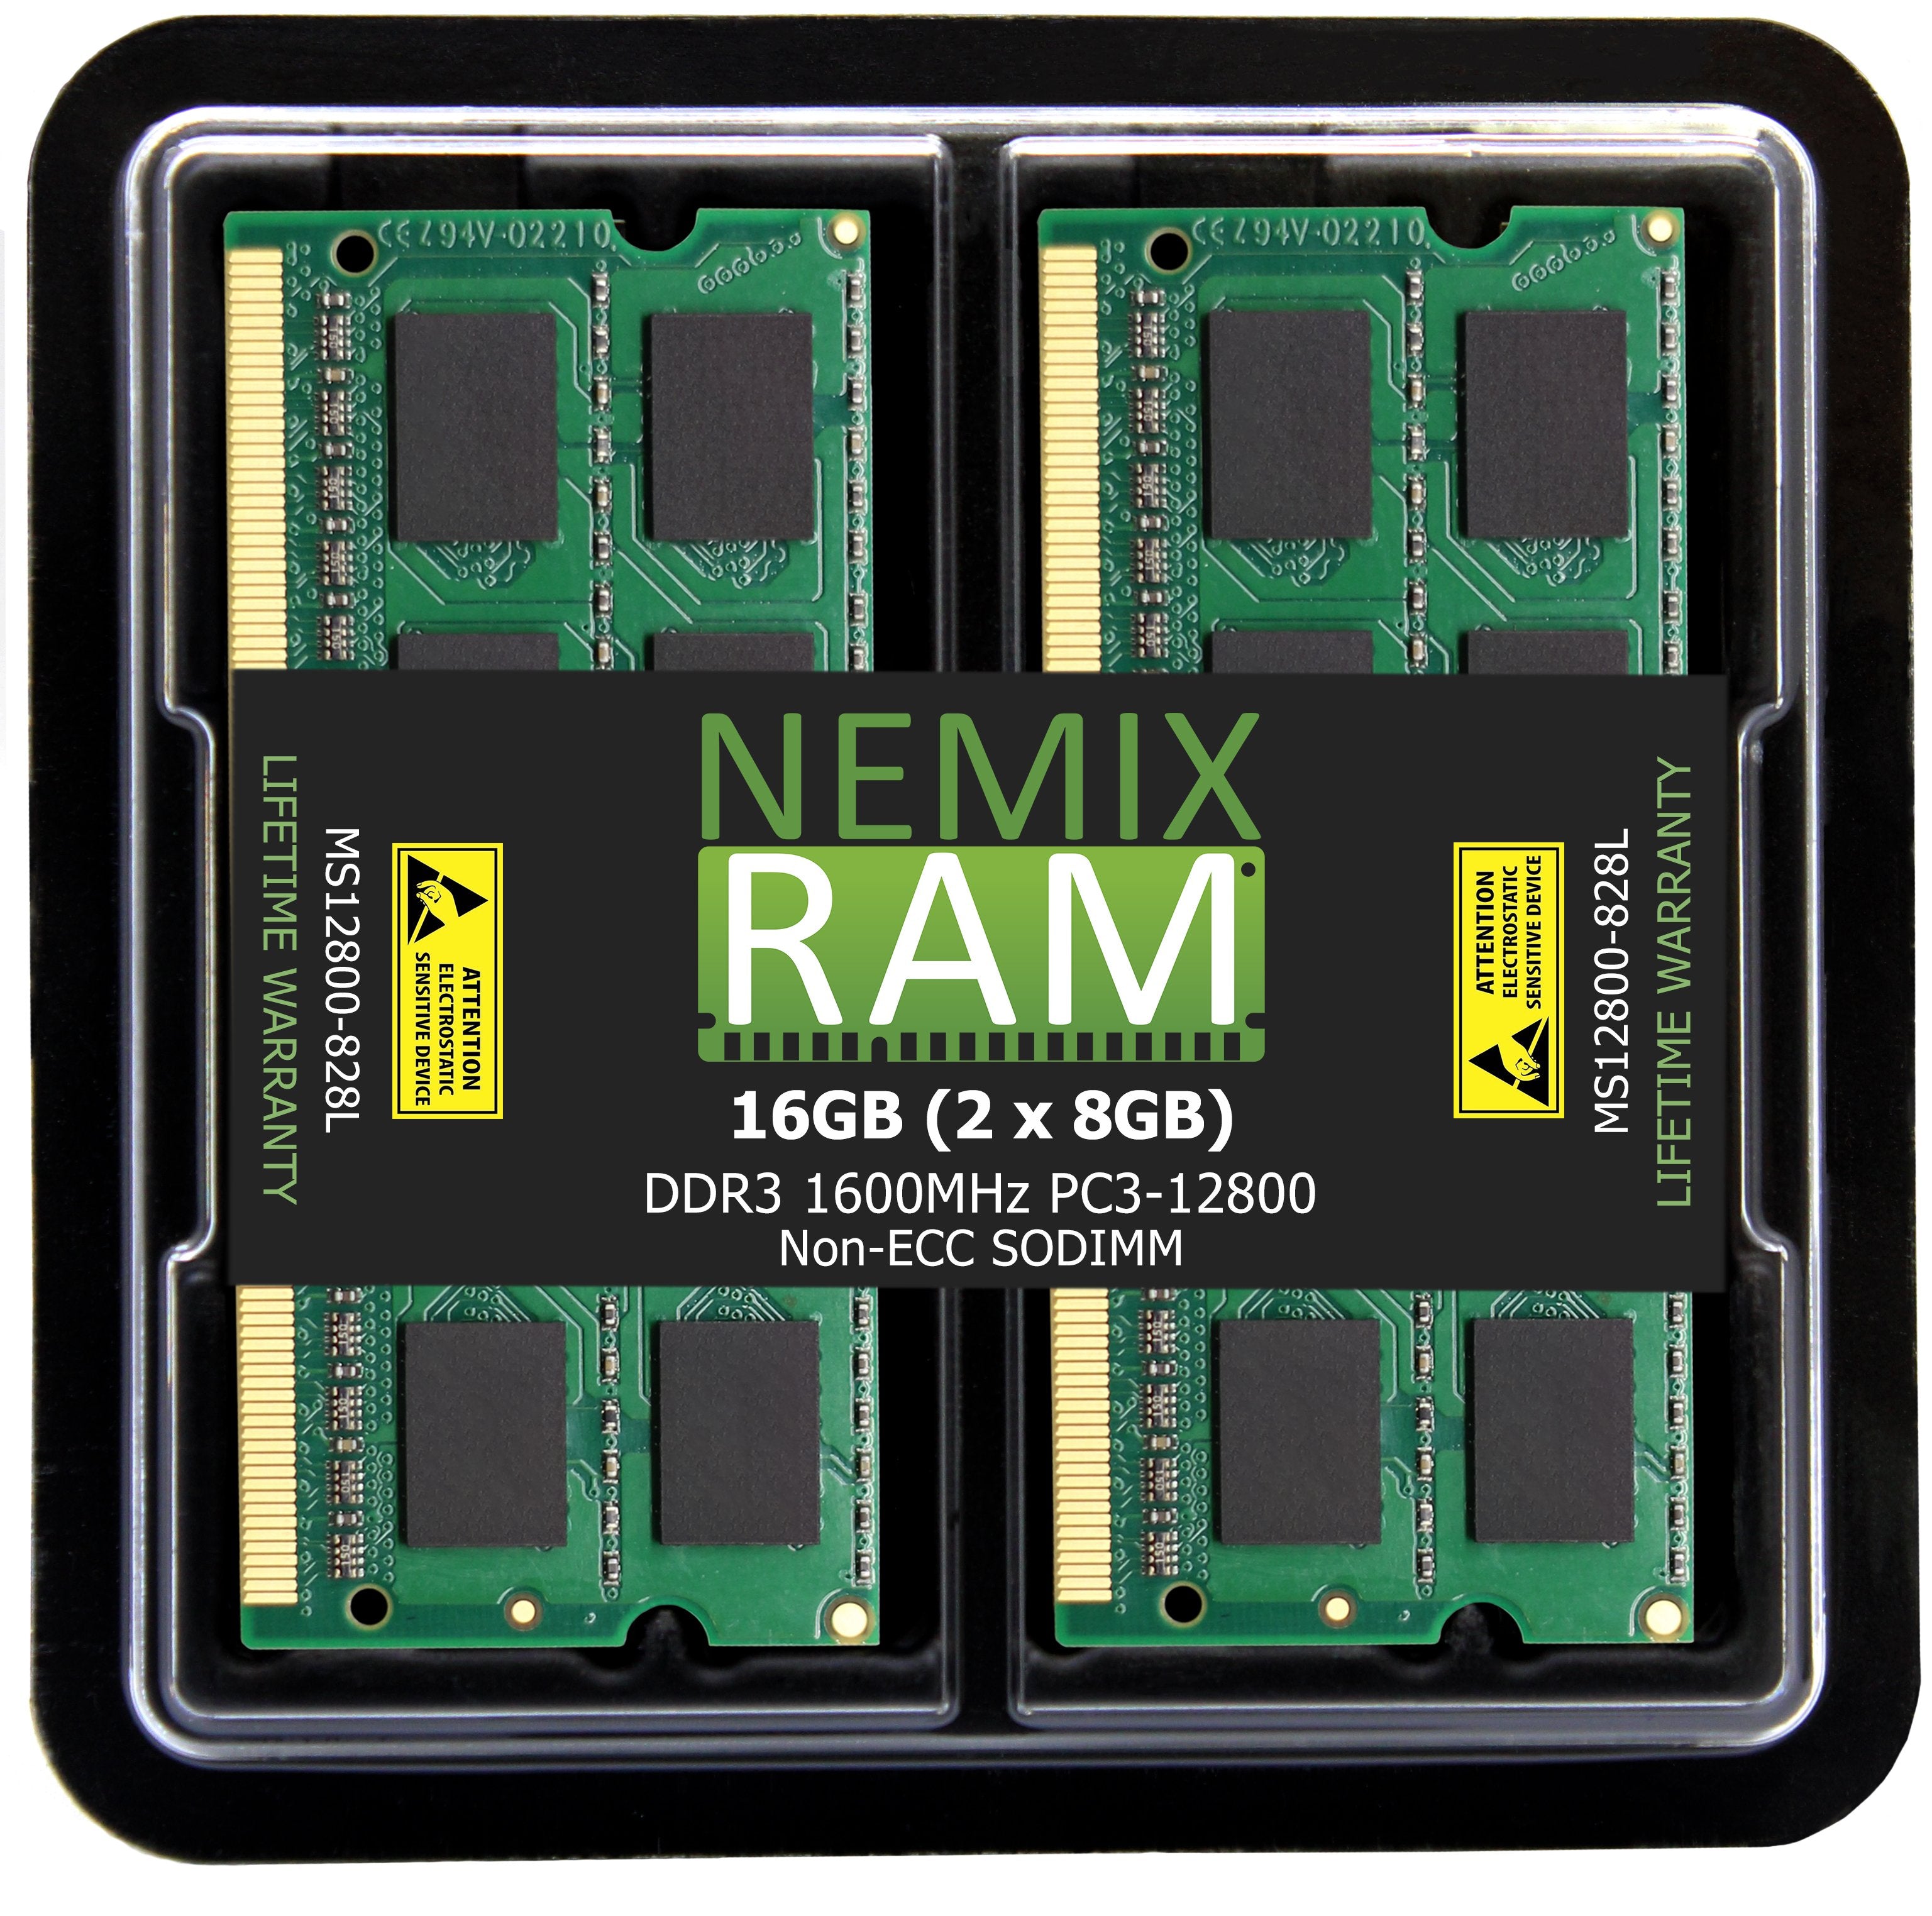 DDR3 1600MHZ PC3-12800 SODIMM for Apple iMac 2012 - 2013 (13,2 14,2)